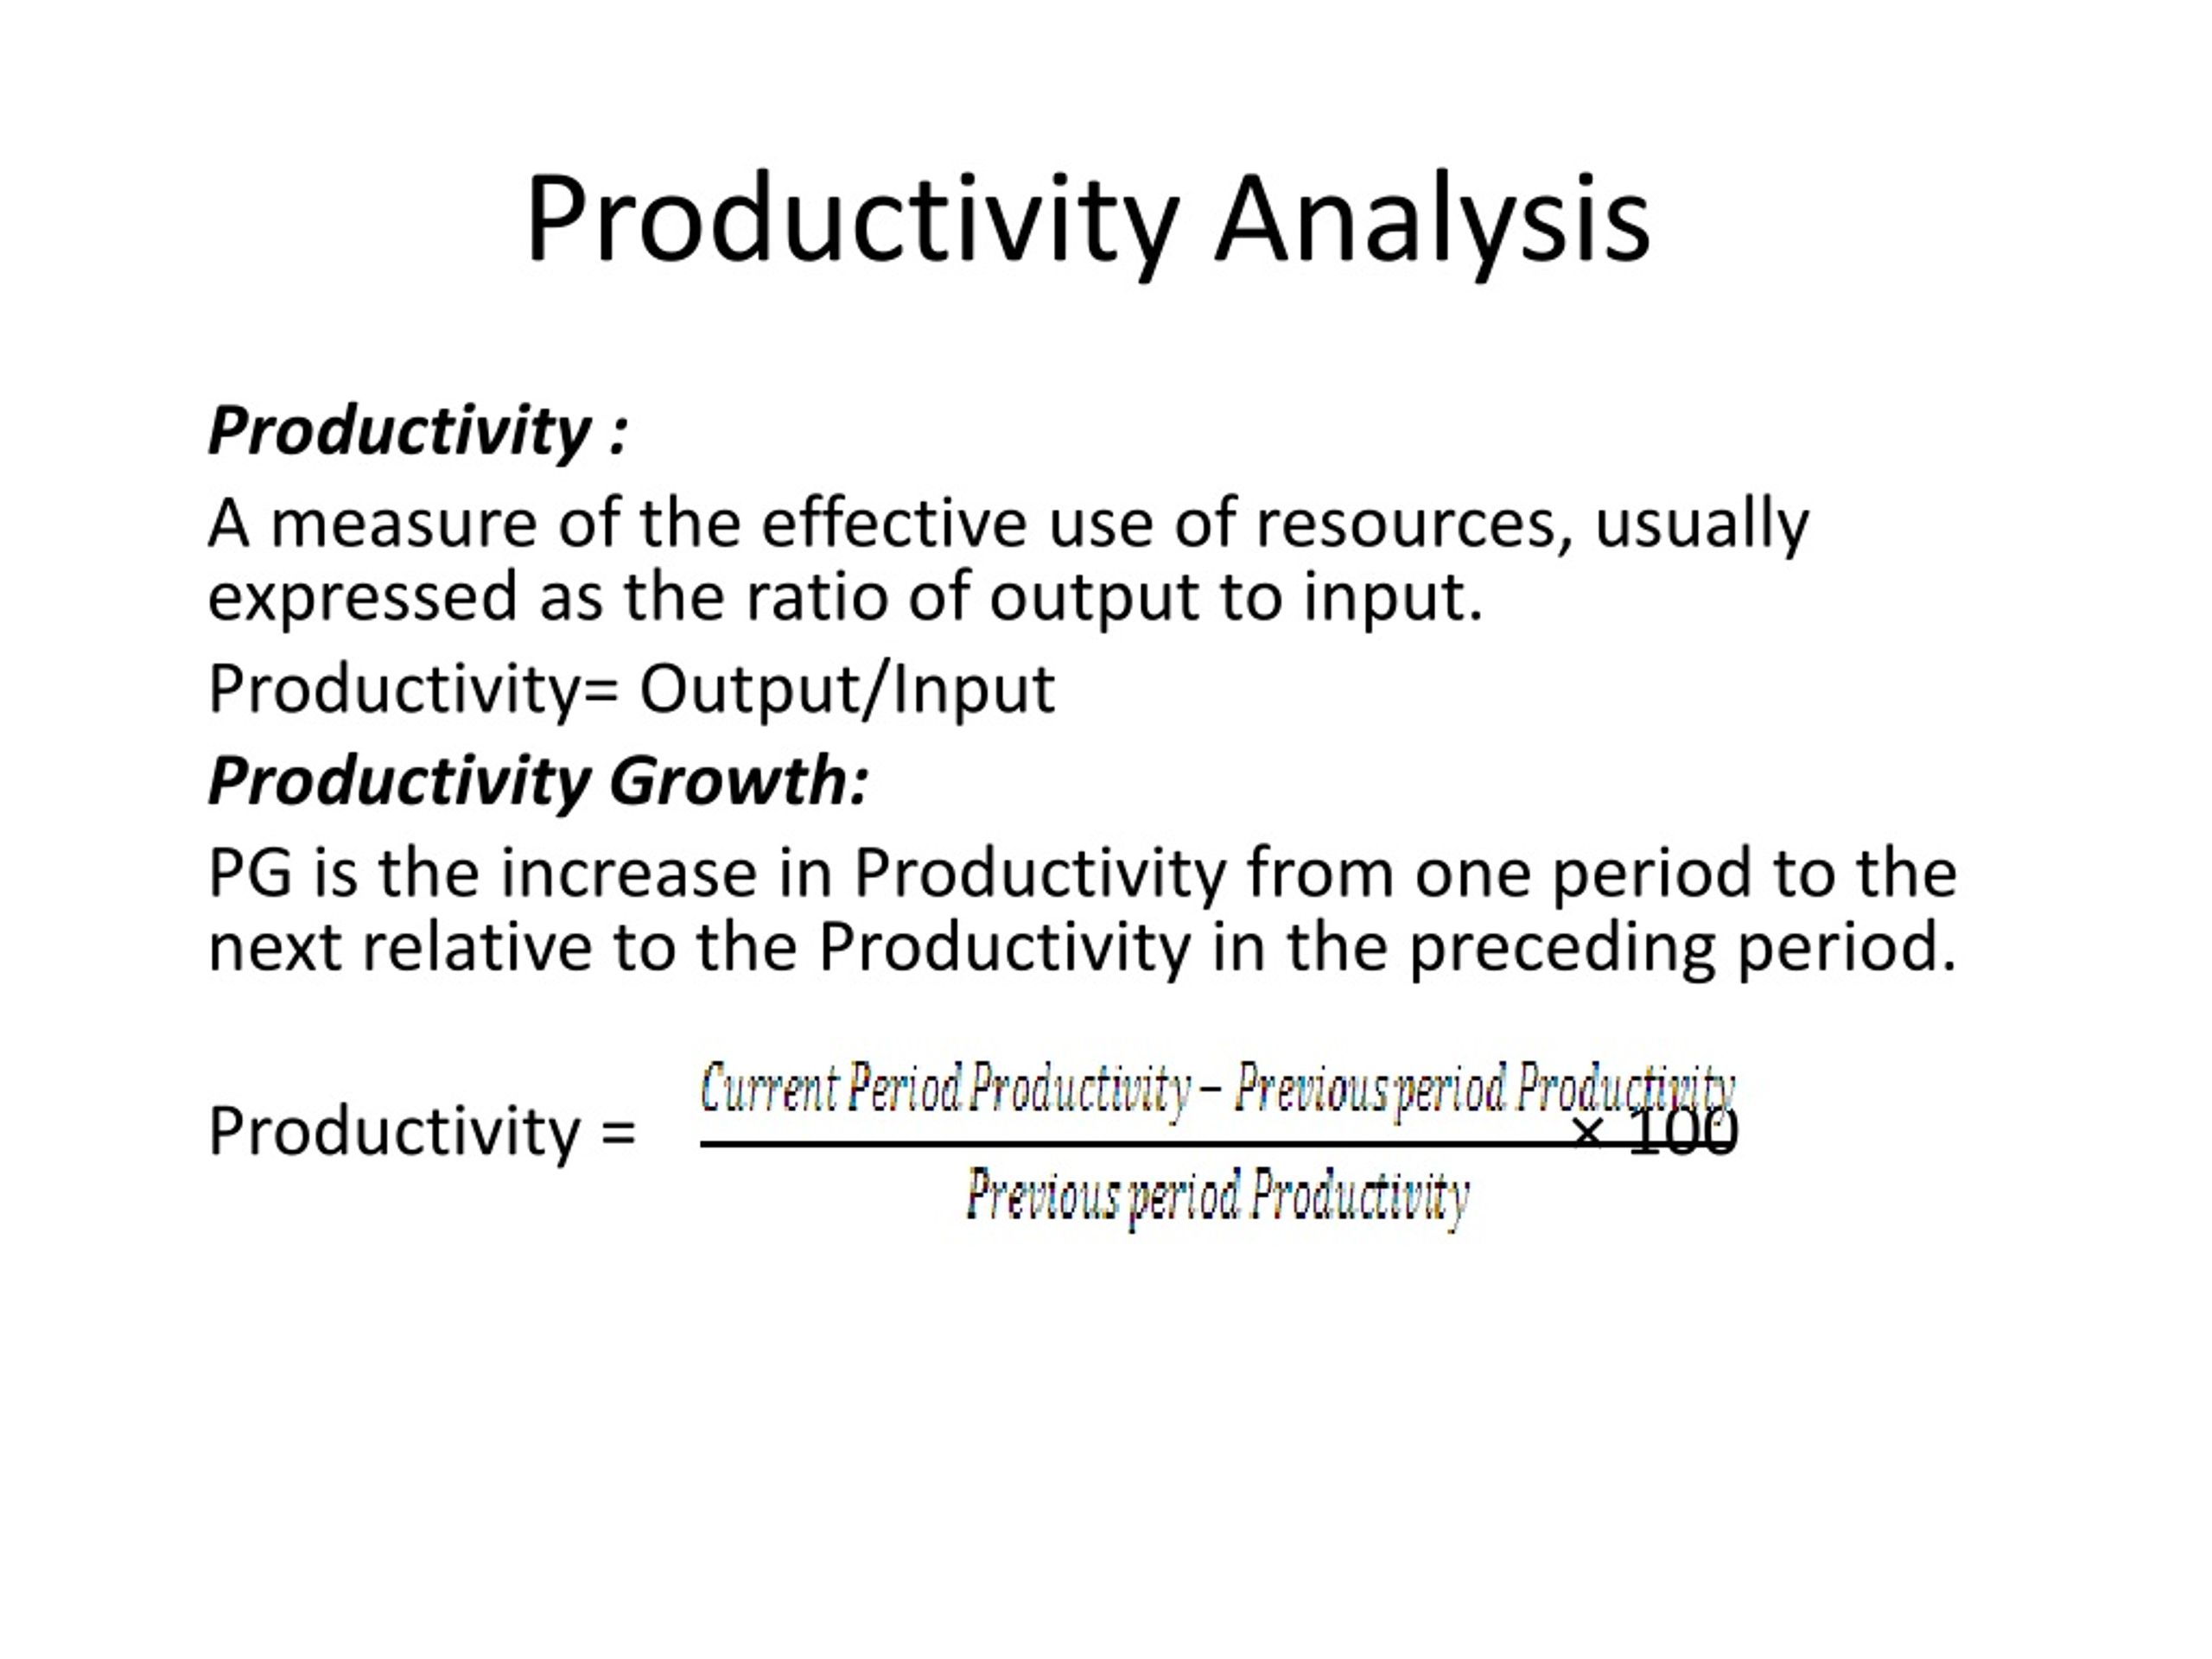 productivity needs analysis case study